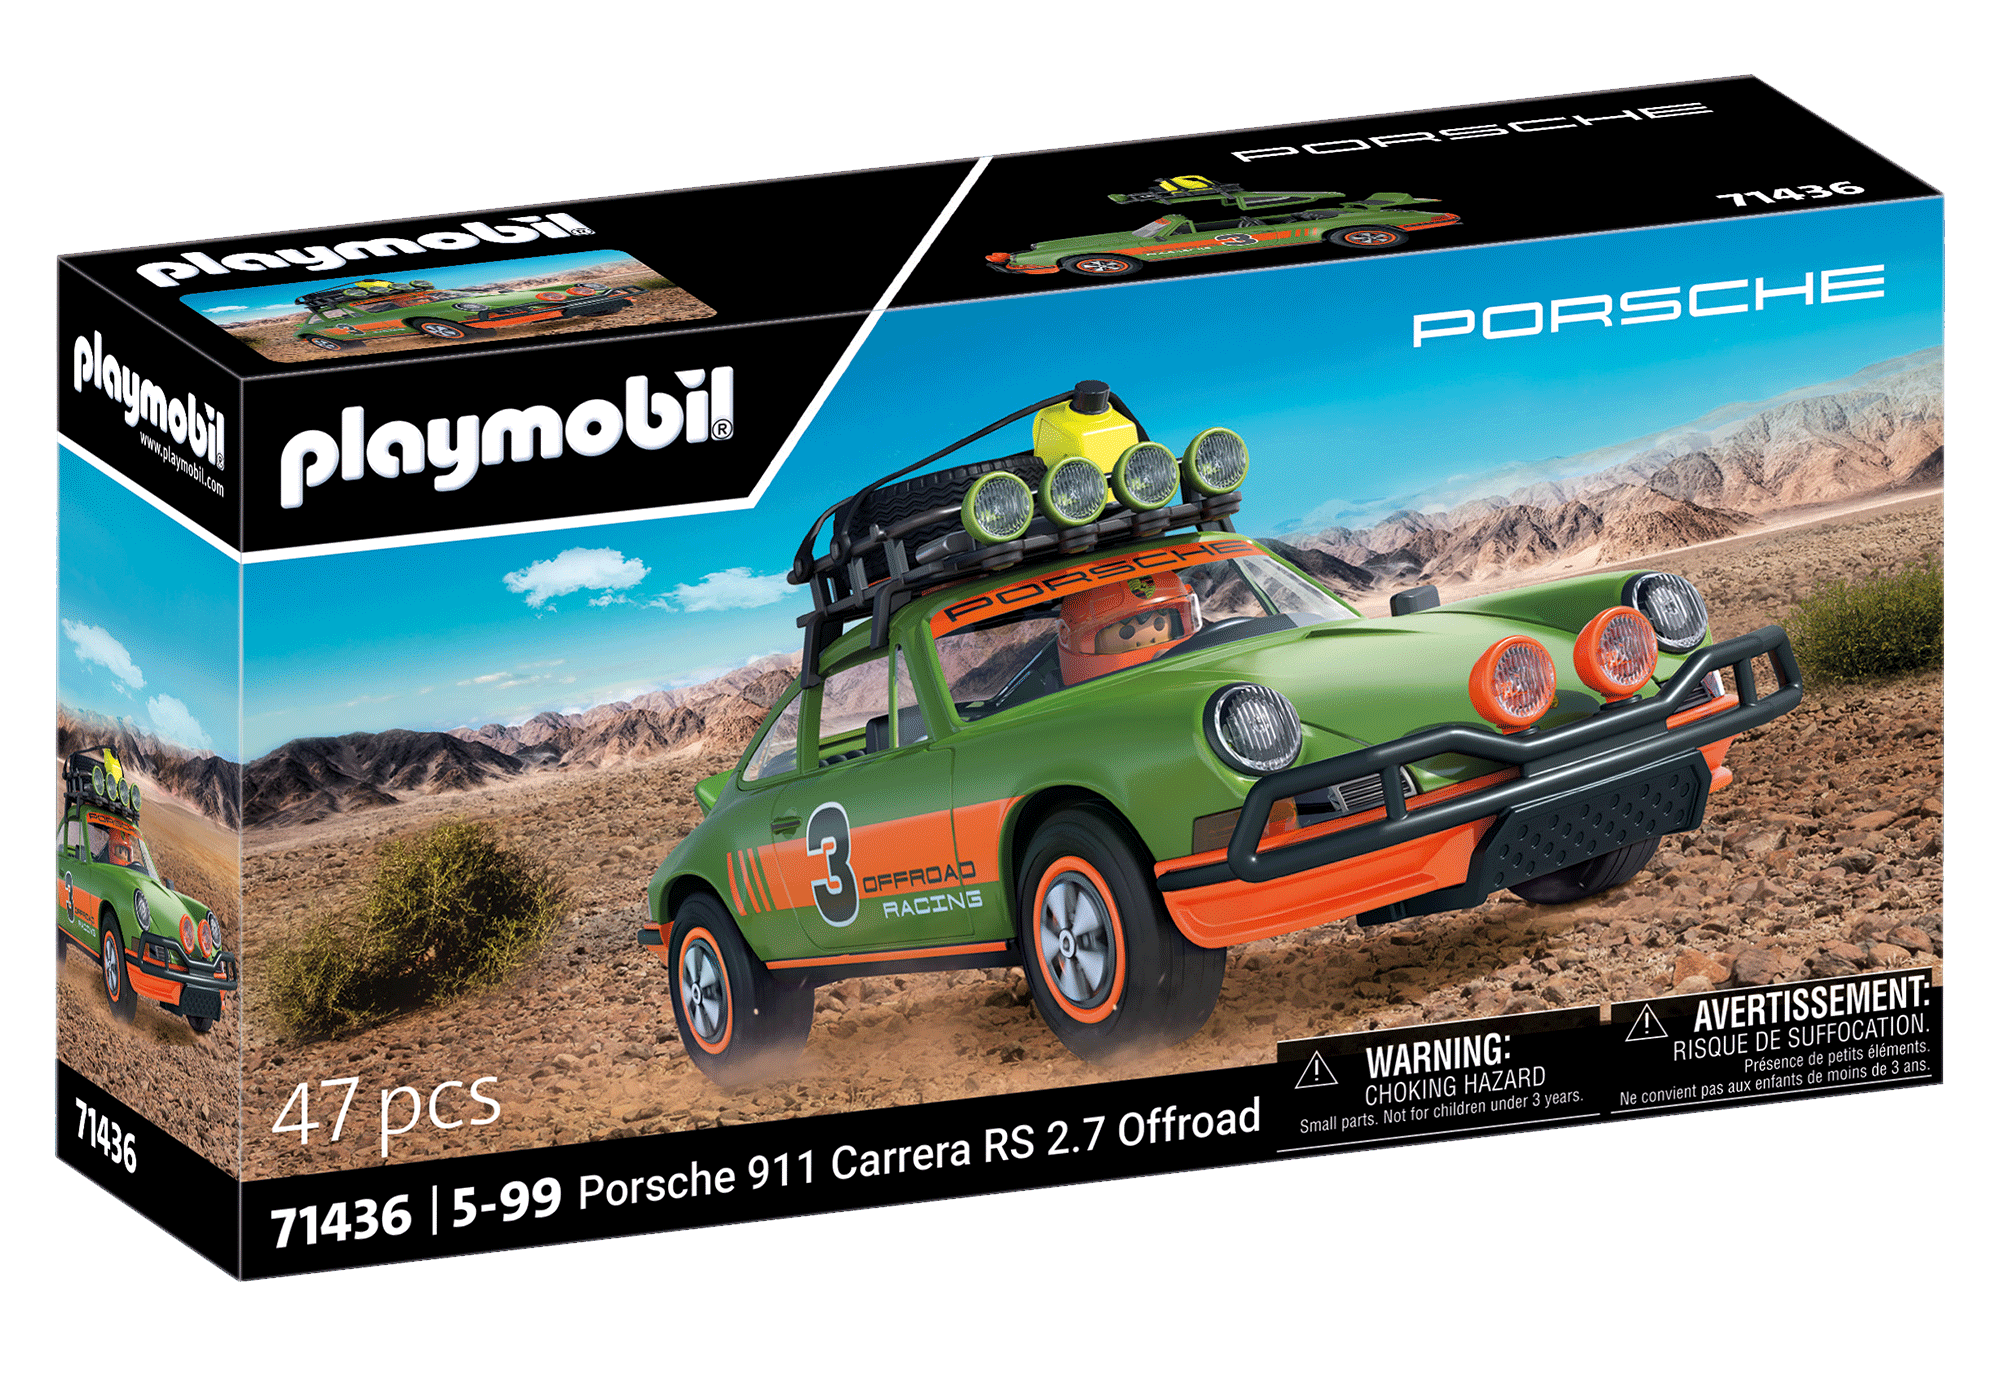 GAMES & TOYS|PLAYMOBIL Playmobil Porsche 911 Carreras S